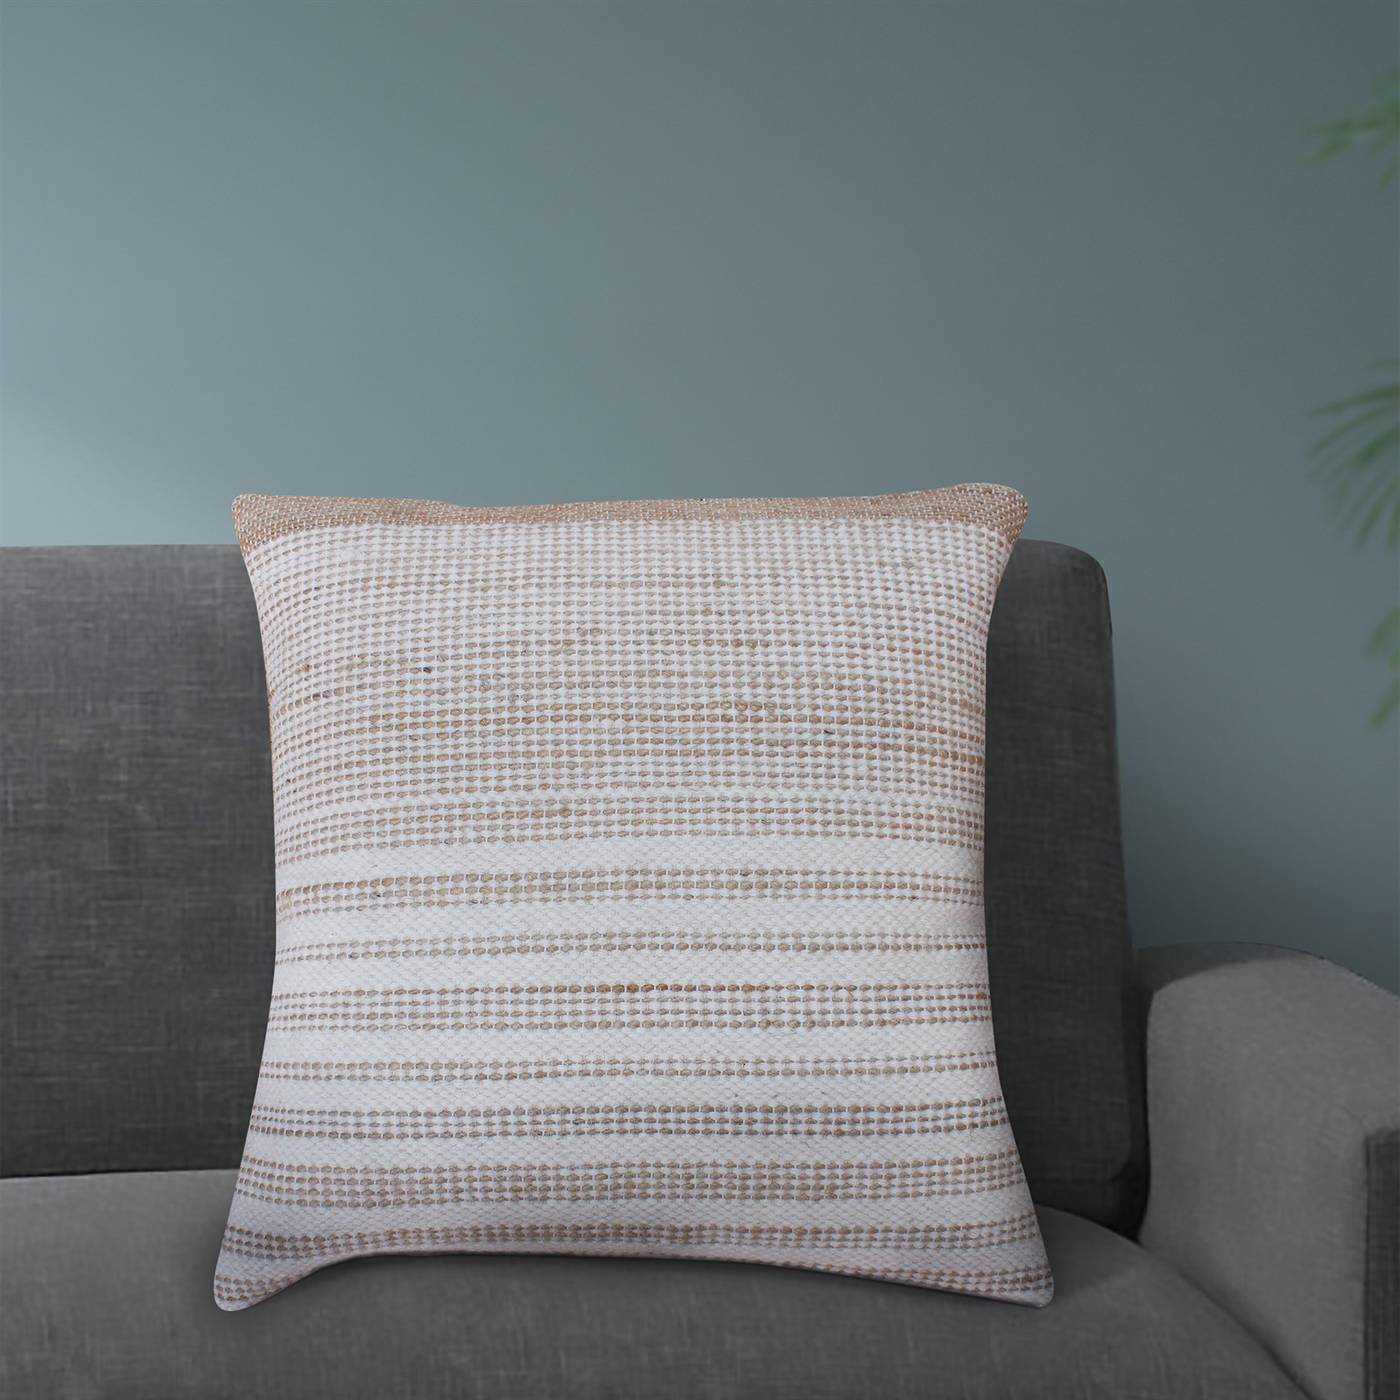 Pukara Cushion, 56x56 cm, Natural White, Natural, Jute, Wool, Hand Woven, Pitloom, Flat Weave